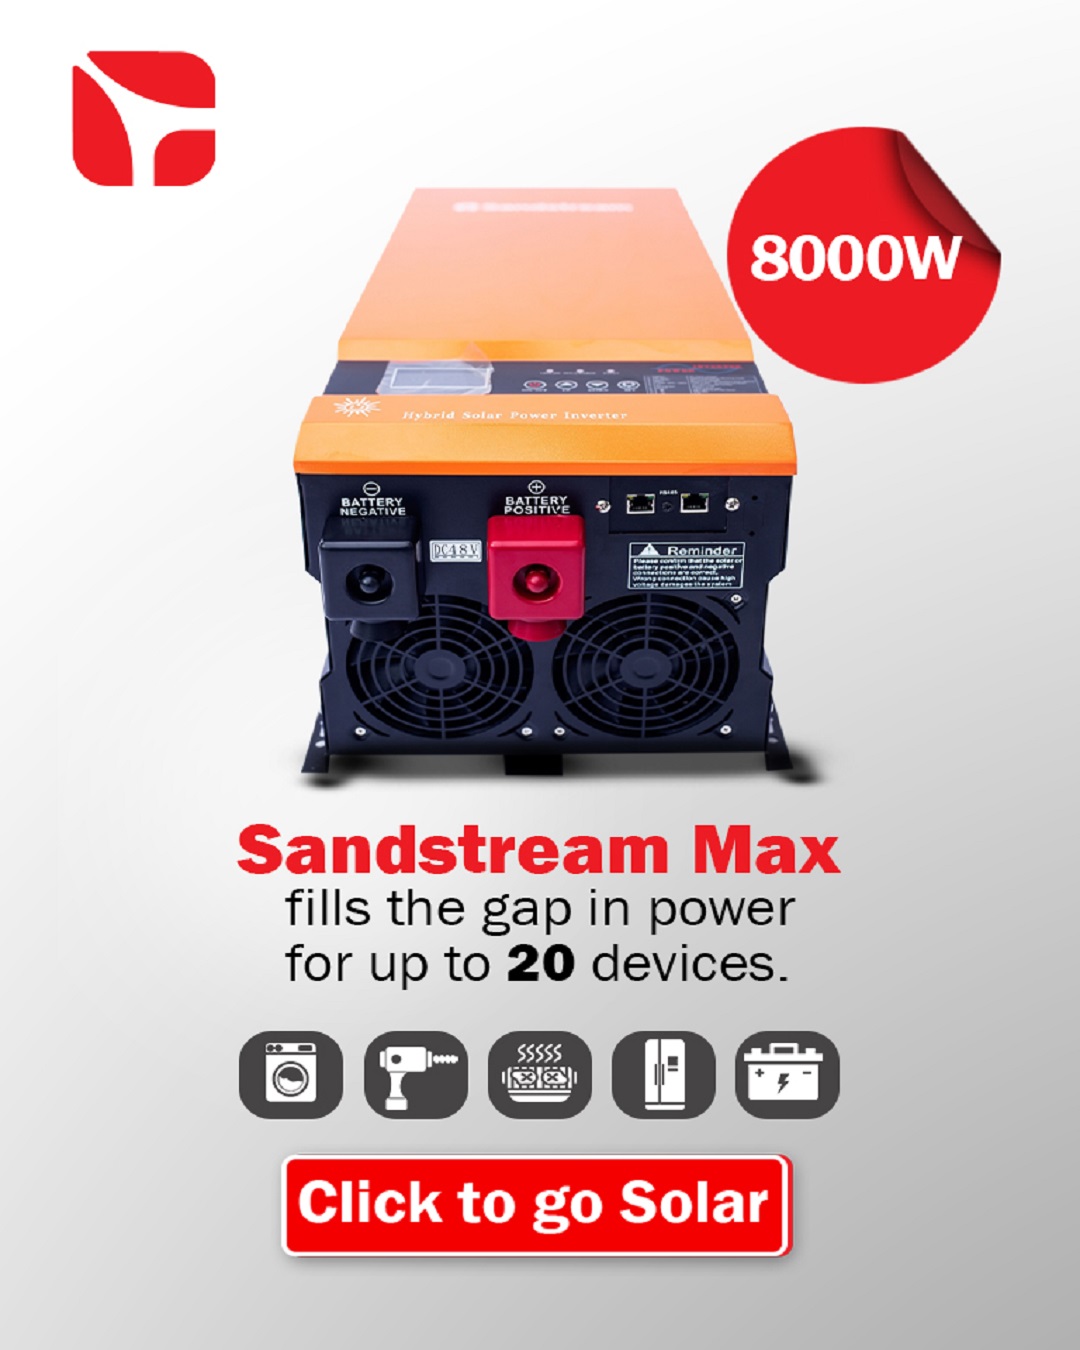 Sandstream Max